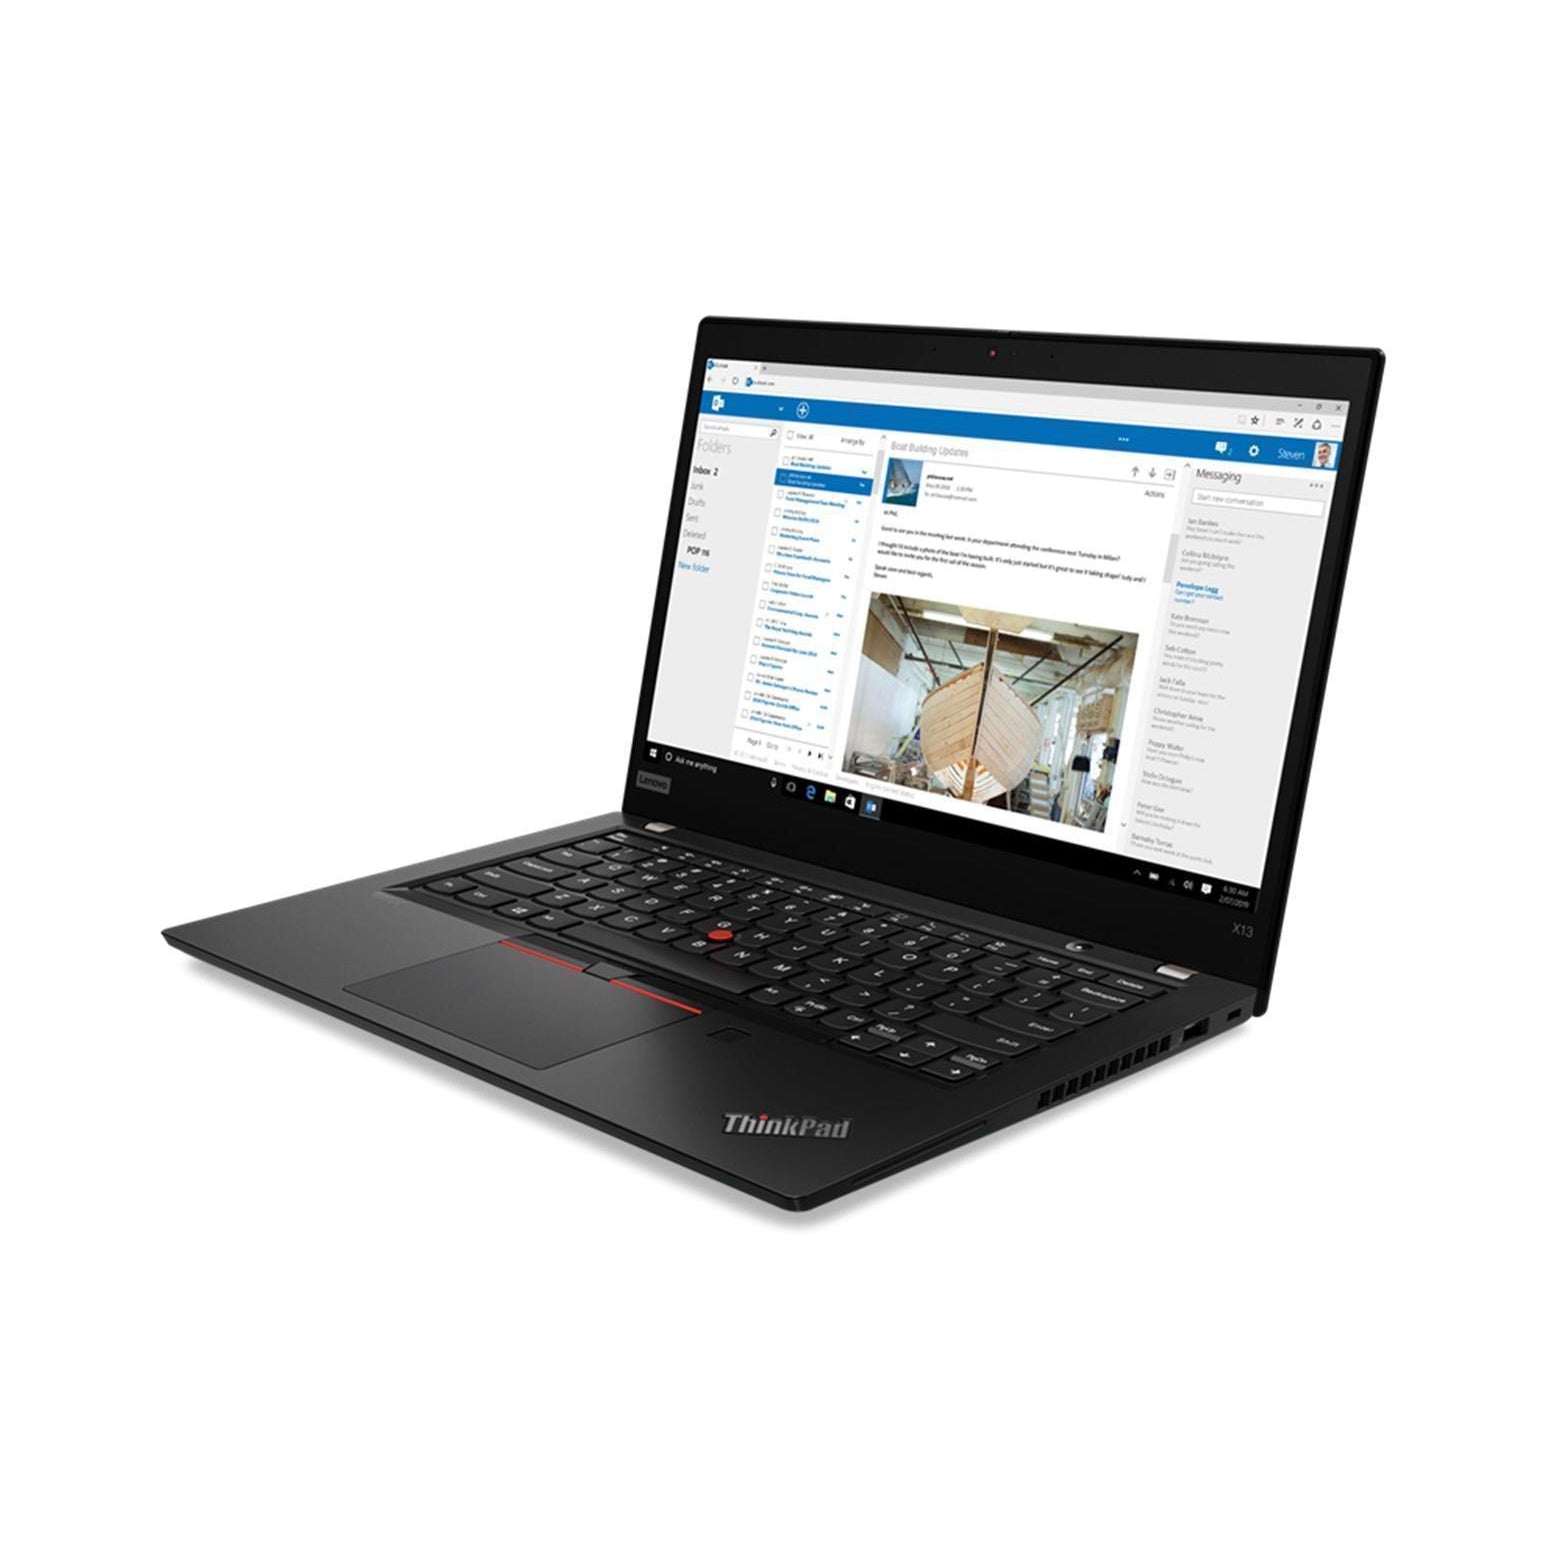 Lenovo ThinkPad 13 2nd Gen Intel Core i5 7th Gen 8GB RAM 128GB SSD 13.3" - Black - Refurbished Excellent